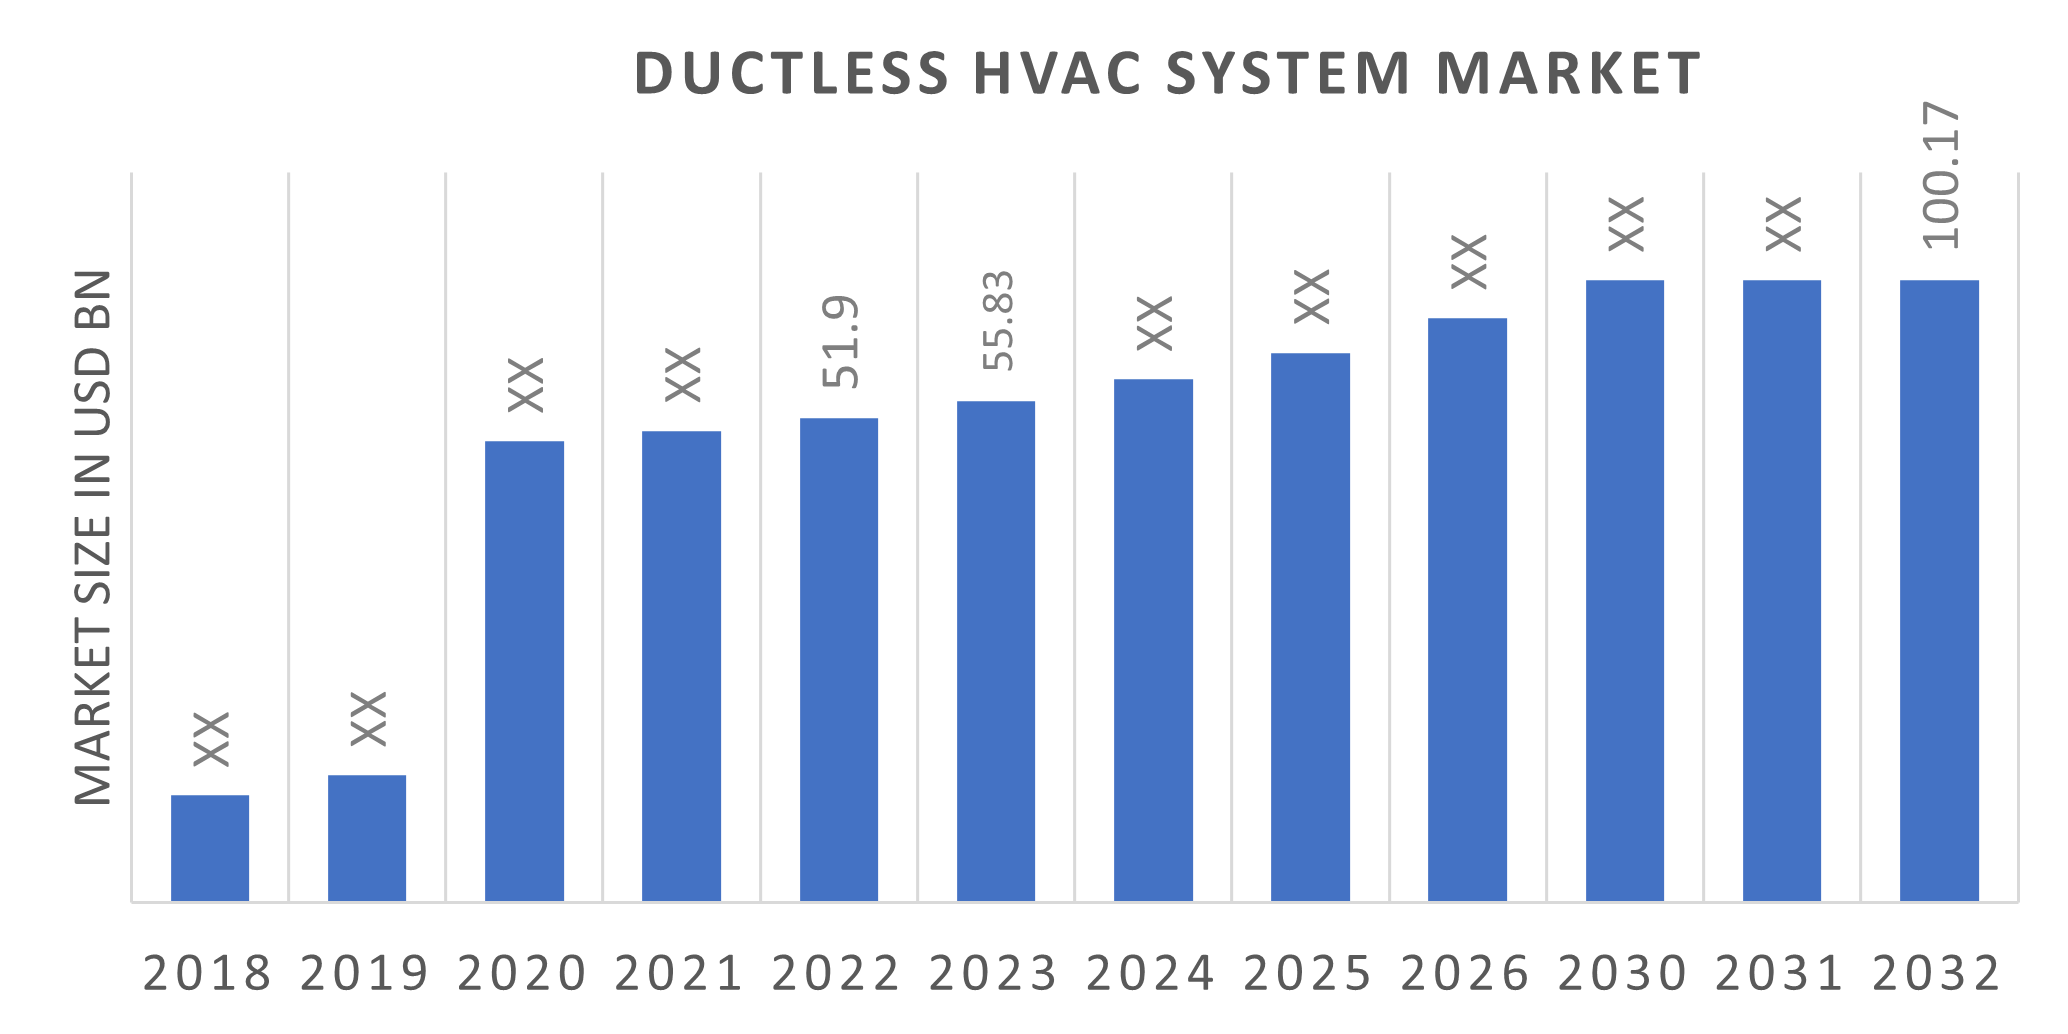 Global Ductless HVAC System Market Overview: